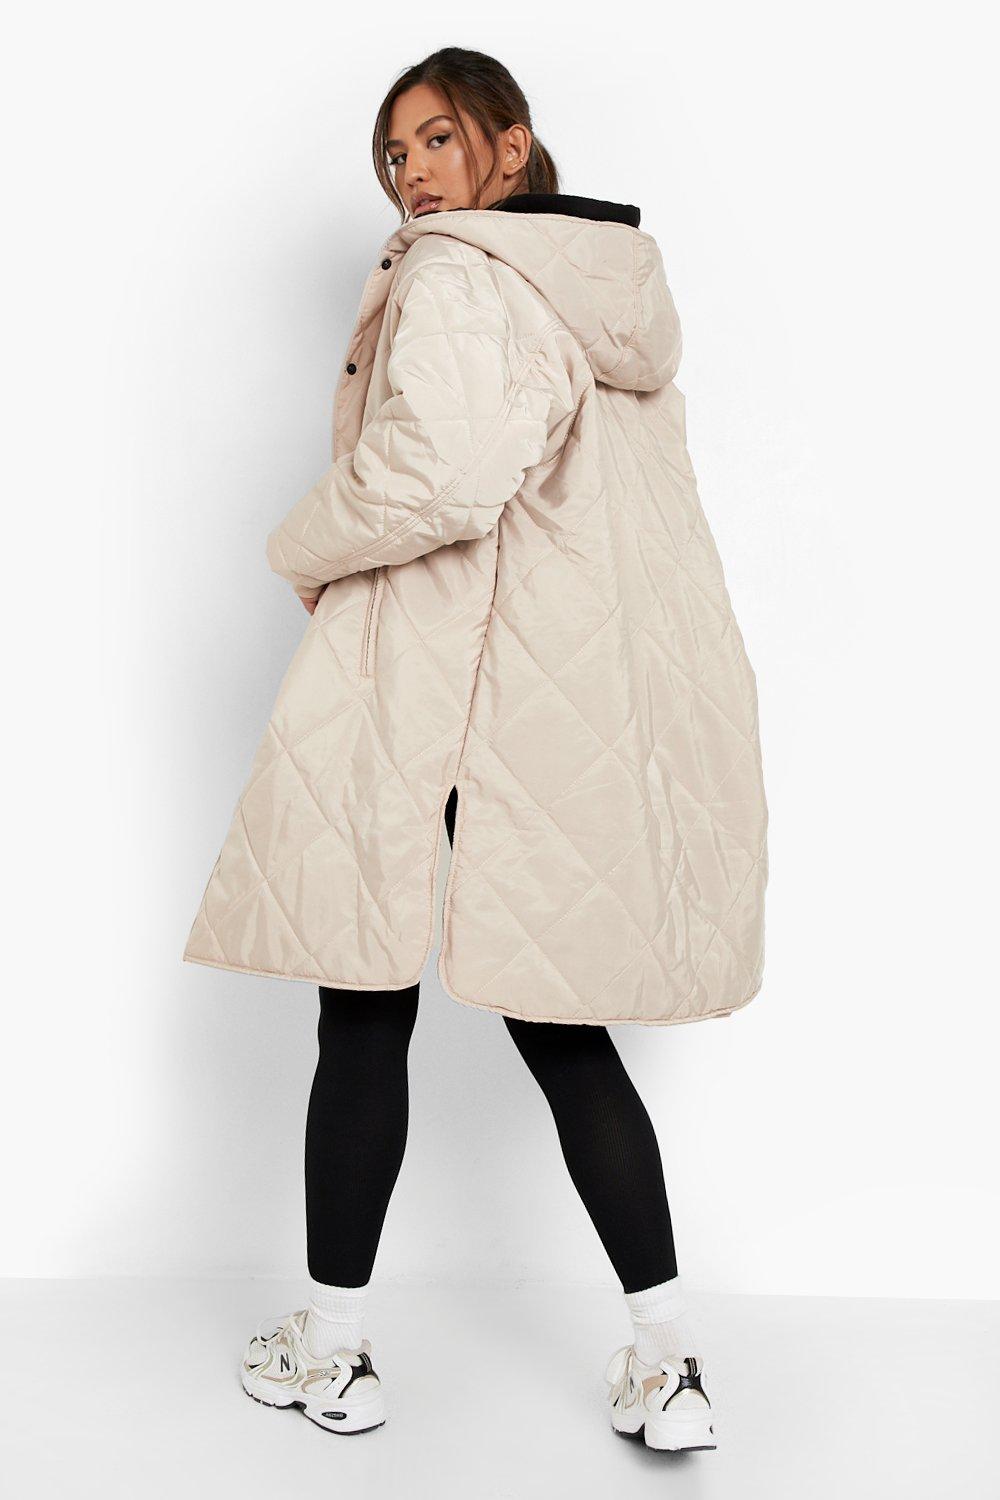 XULIKU Women's Lightweight Quilted Jacket Hooded Padding Long Bubble Coats  with 2 Big Pockets for Women at  Women's Coats Shop